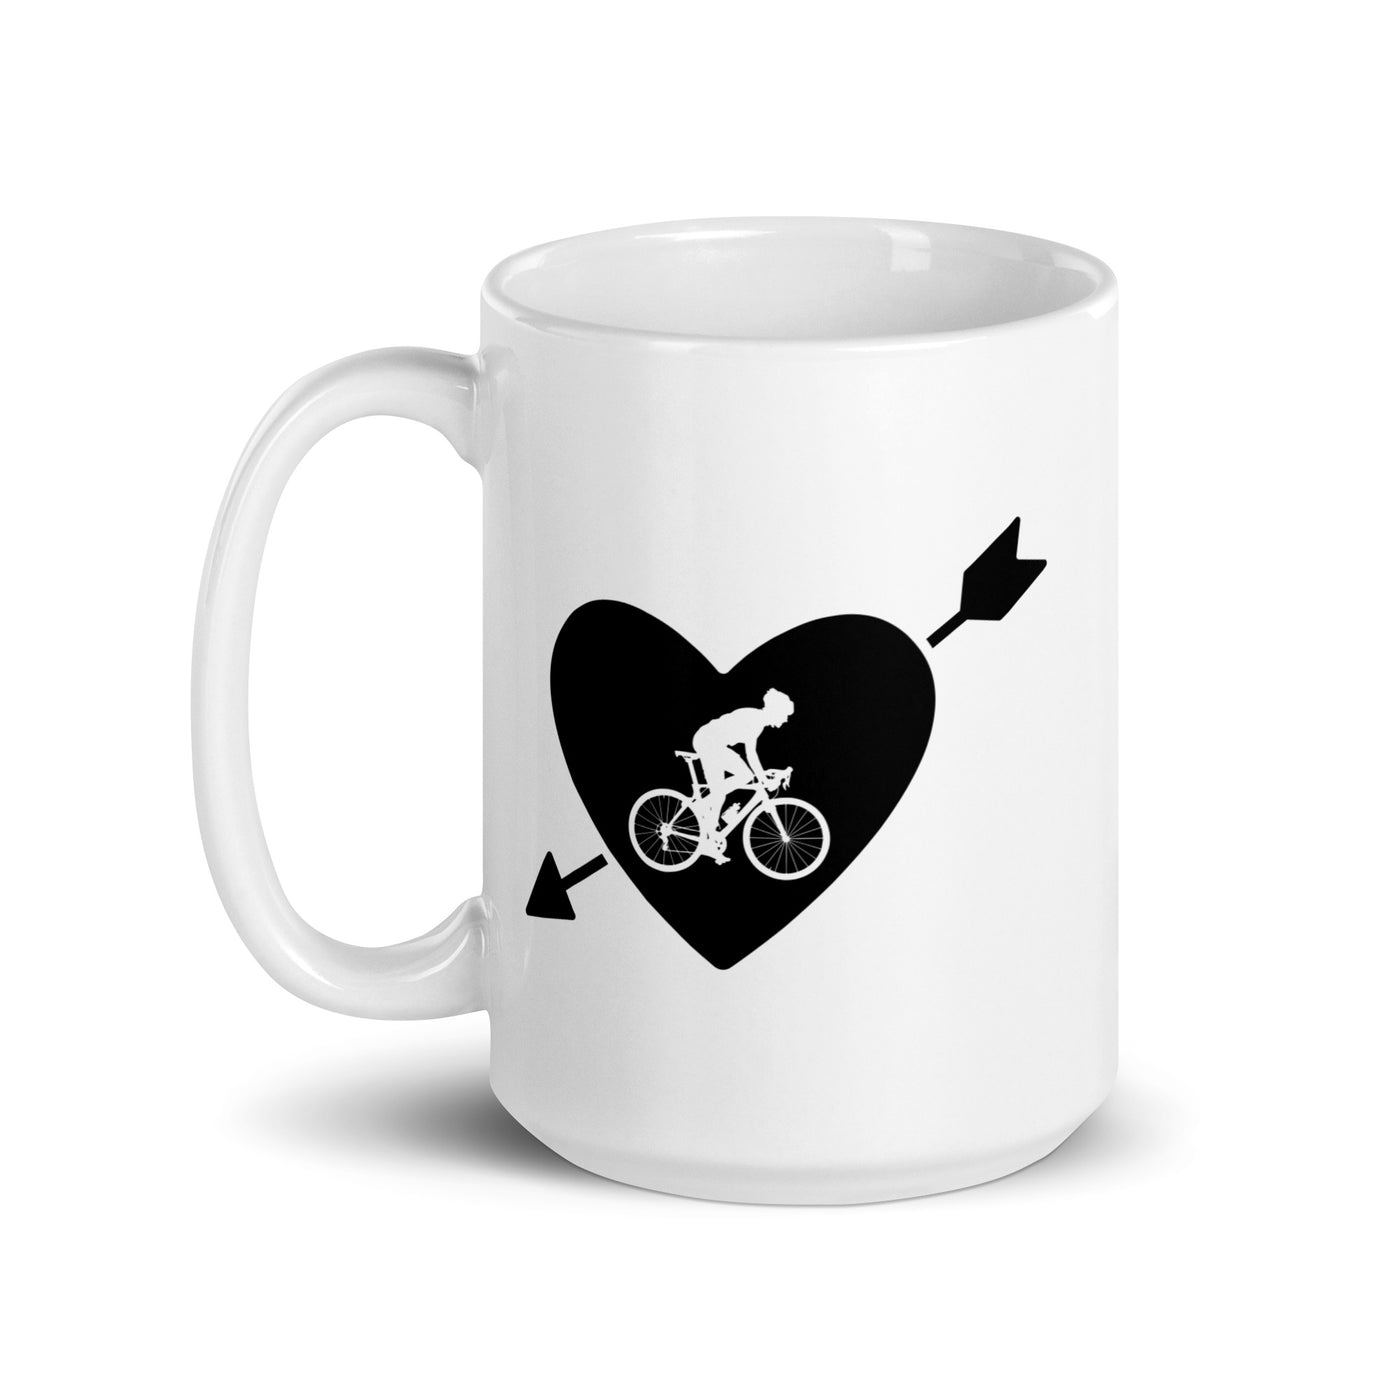 Arrow Heart And Cycling 1 - Tasse fahrrad